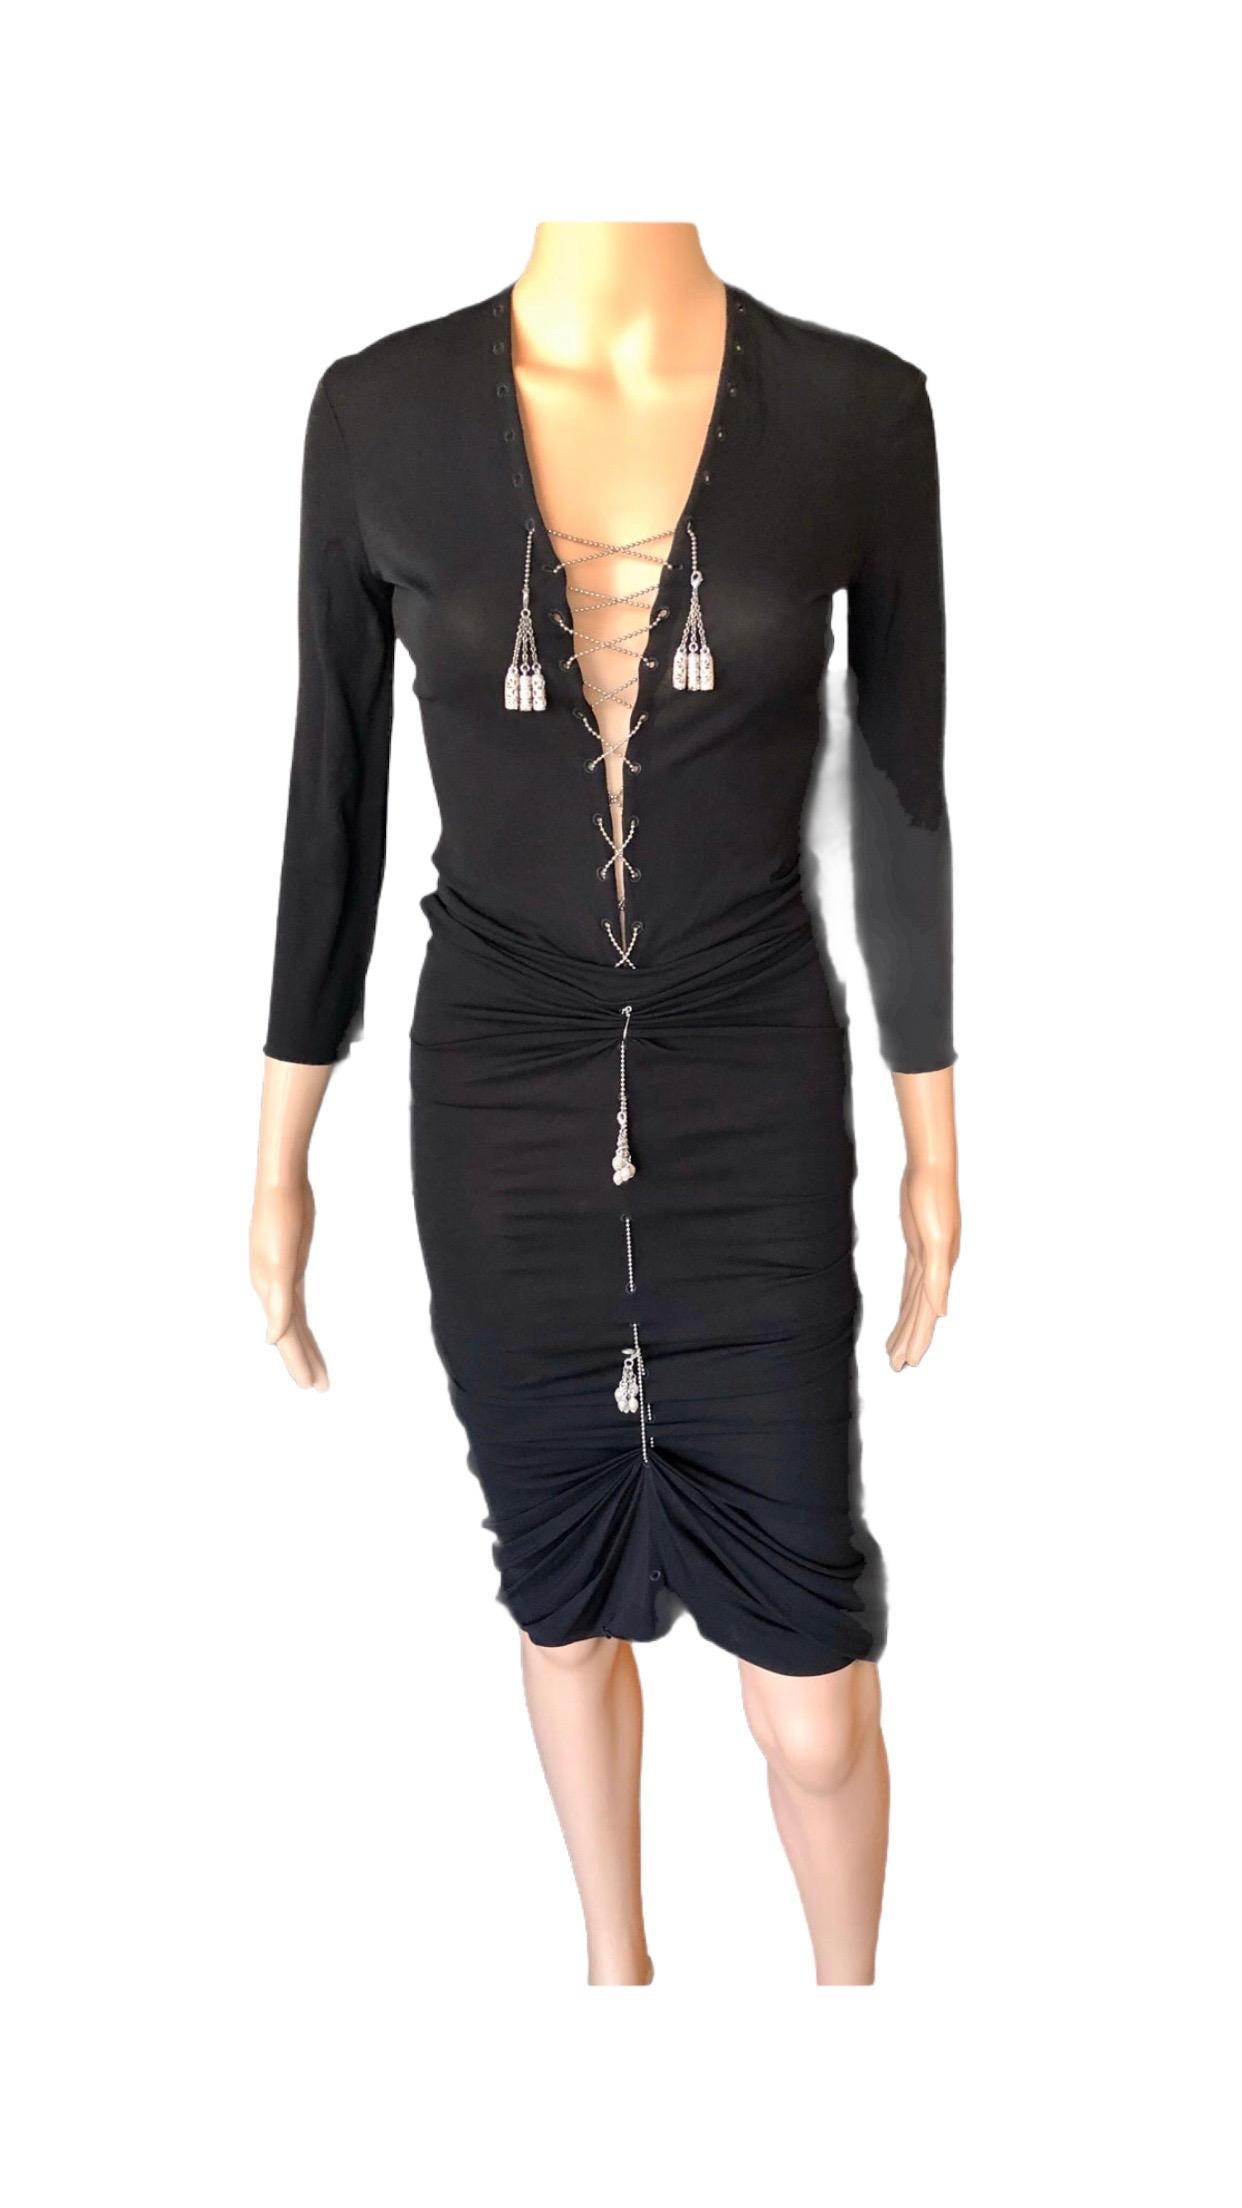  1990's Jean Paul Gaultier Knit Semi-Sheer Chain Embellished Black Dress For Sale 1